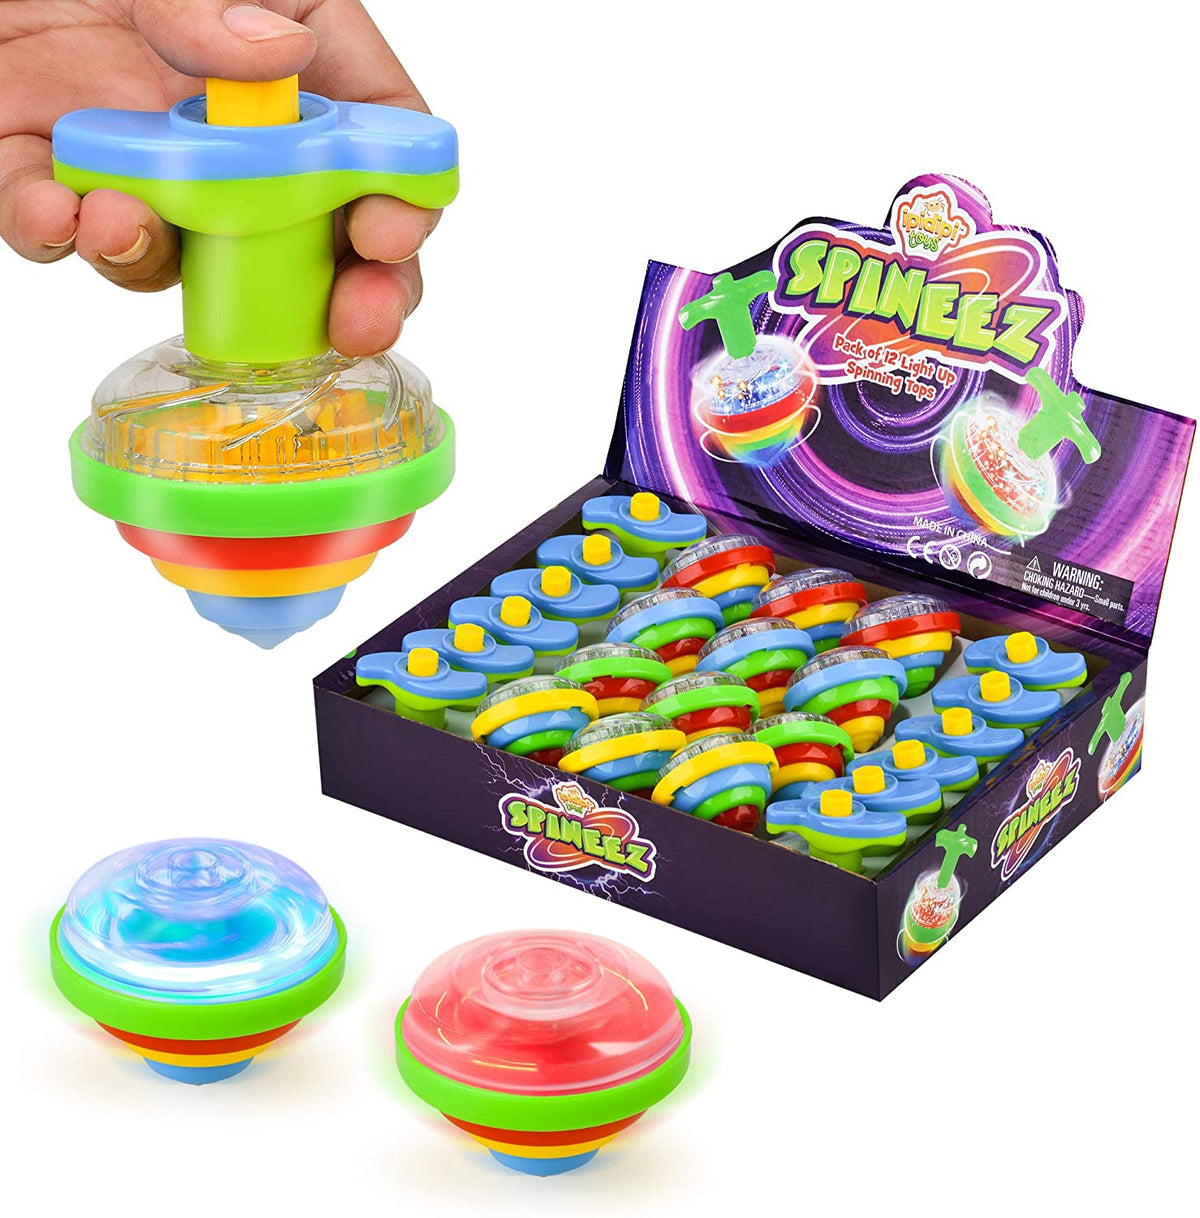 Light Up Spinning Tops - Set of 12 - UFO Spinner Toys